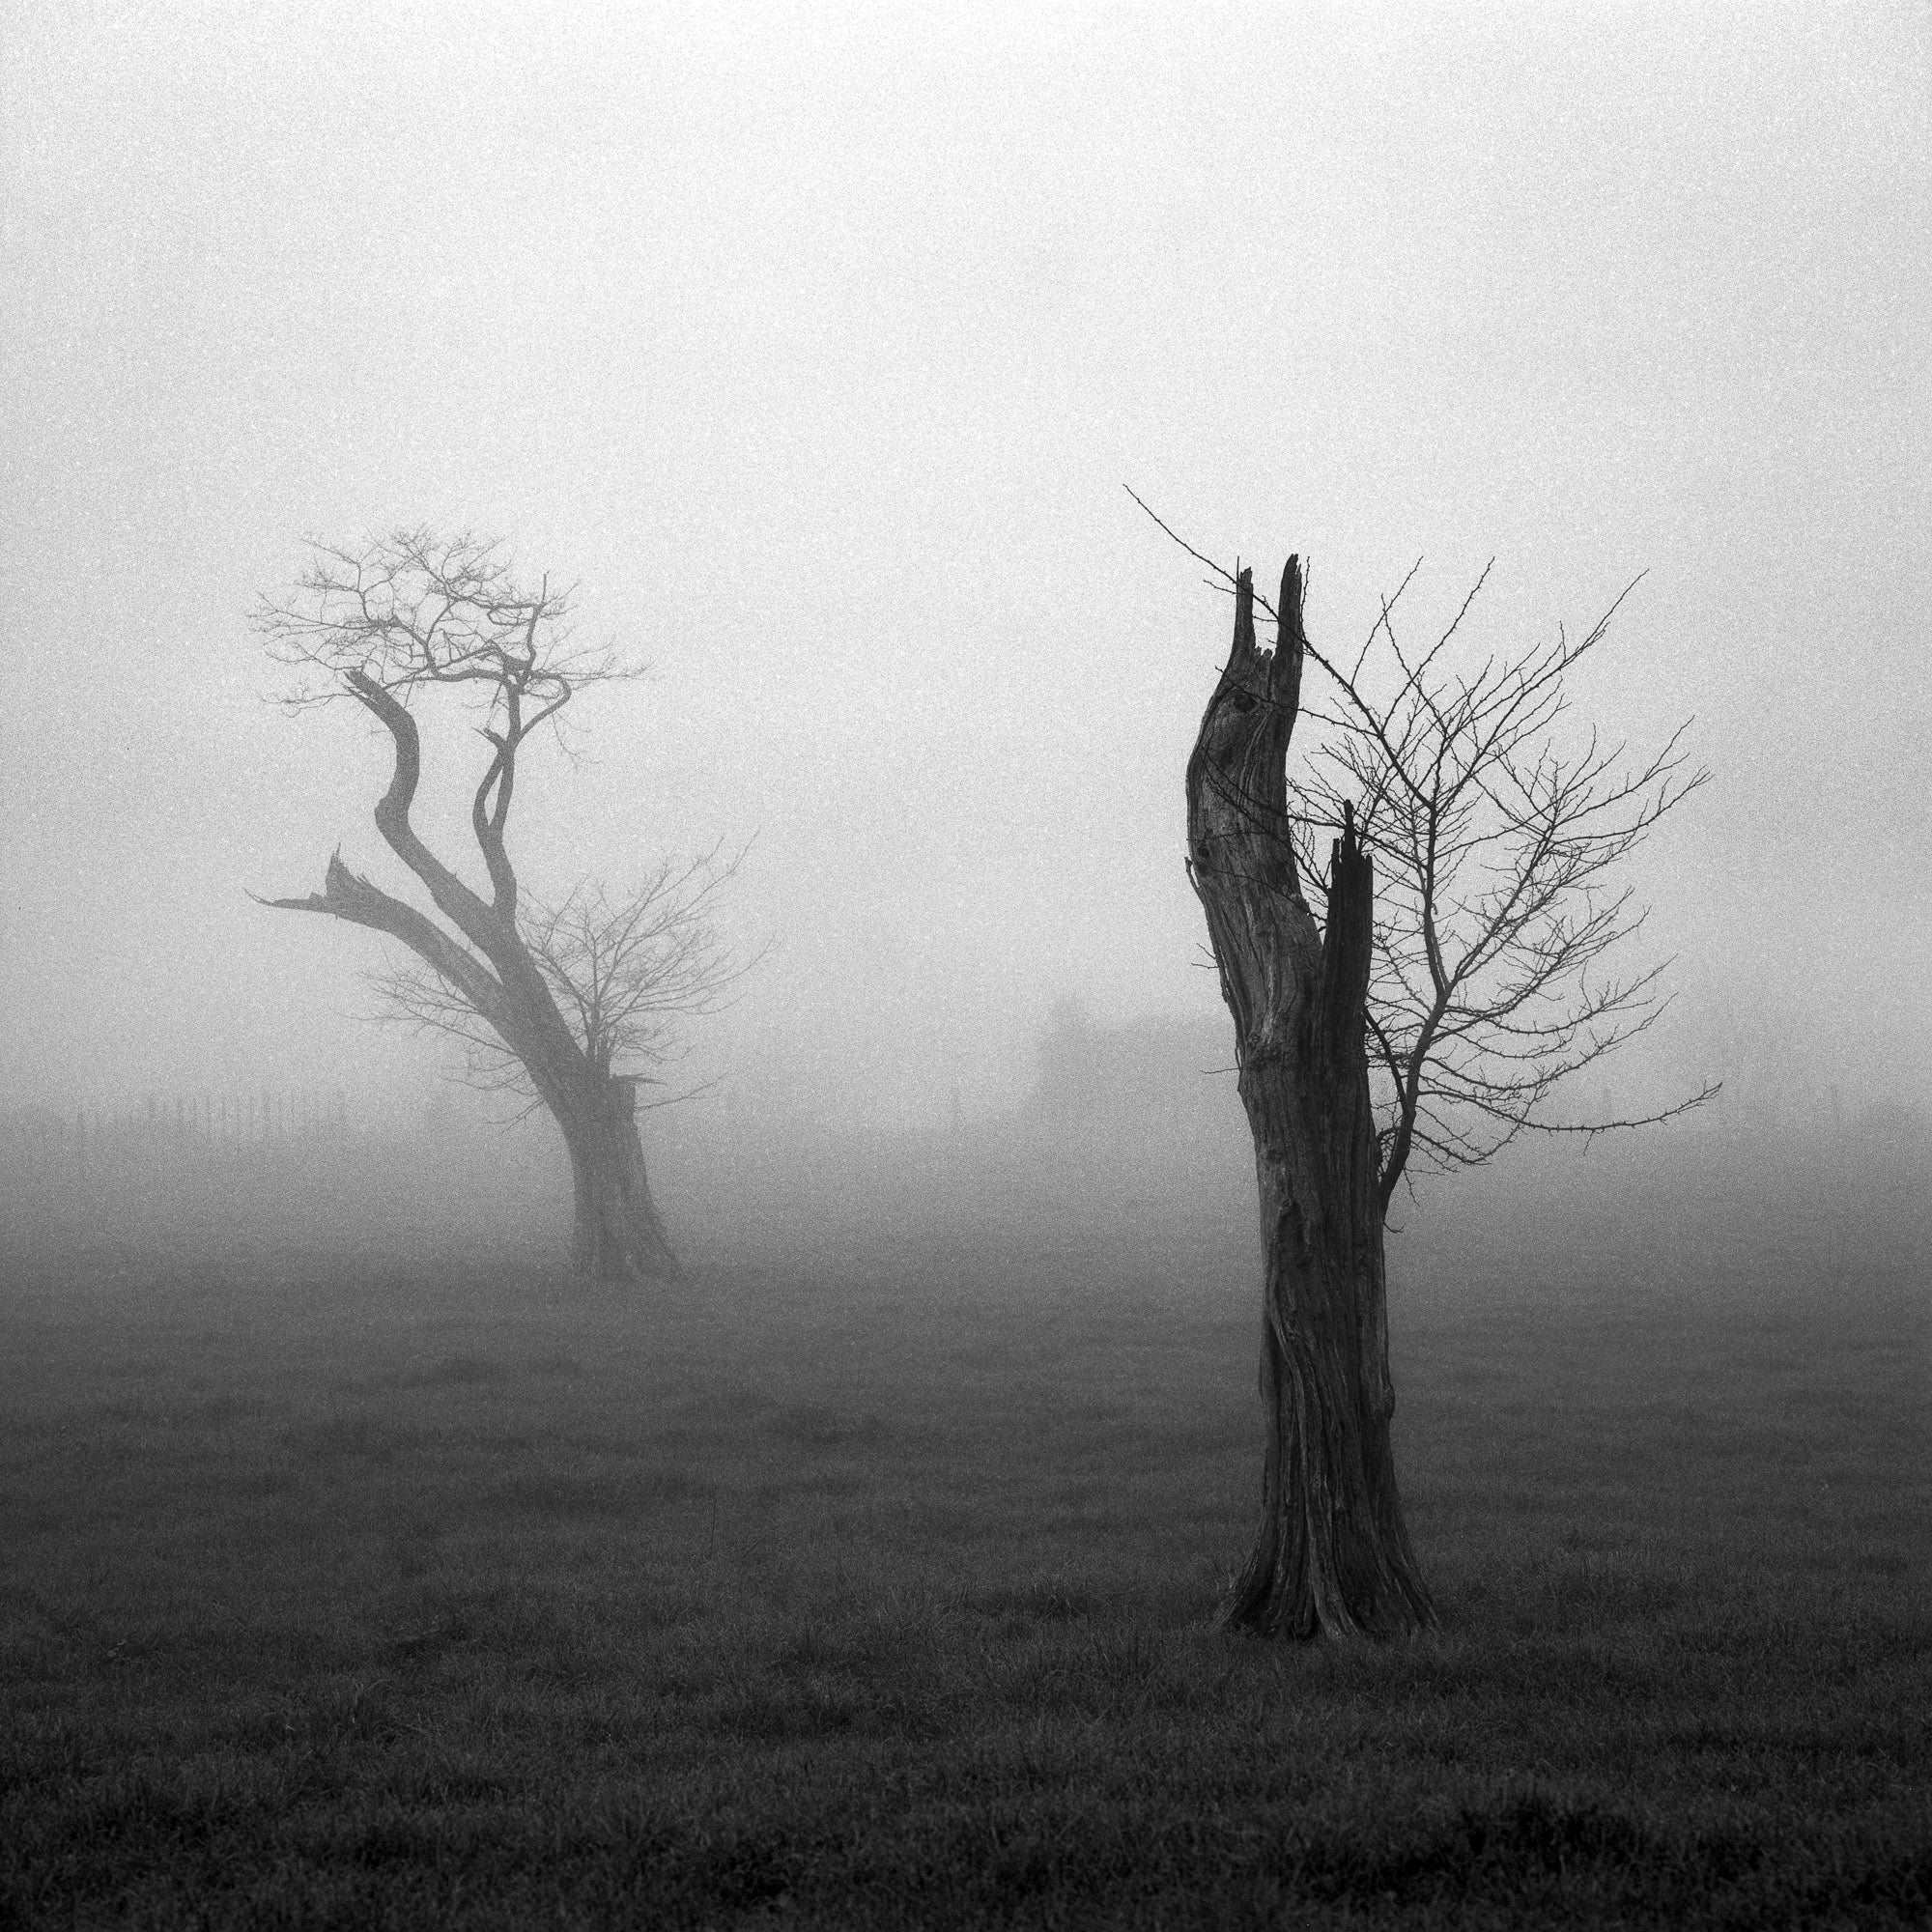 Opposites in the Mist - Waikato - by Award Winning New Zealand Landscape Photographer Stephen Milner